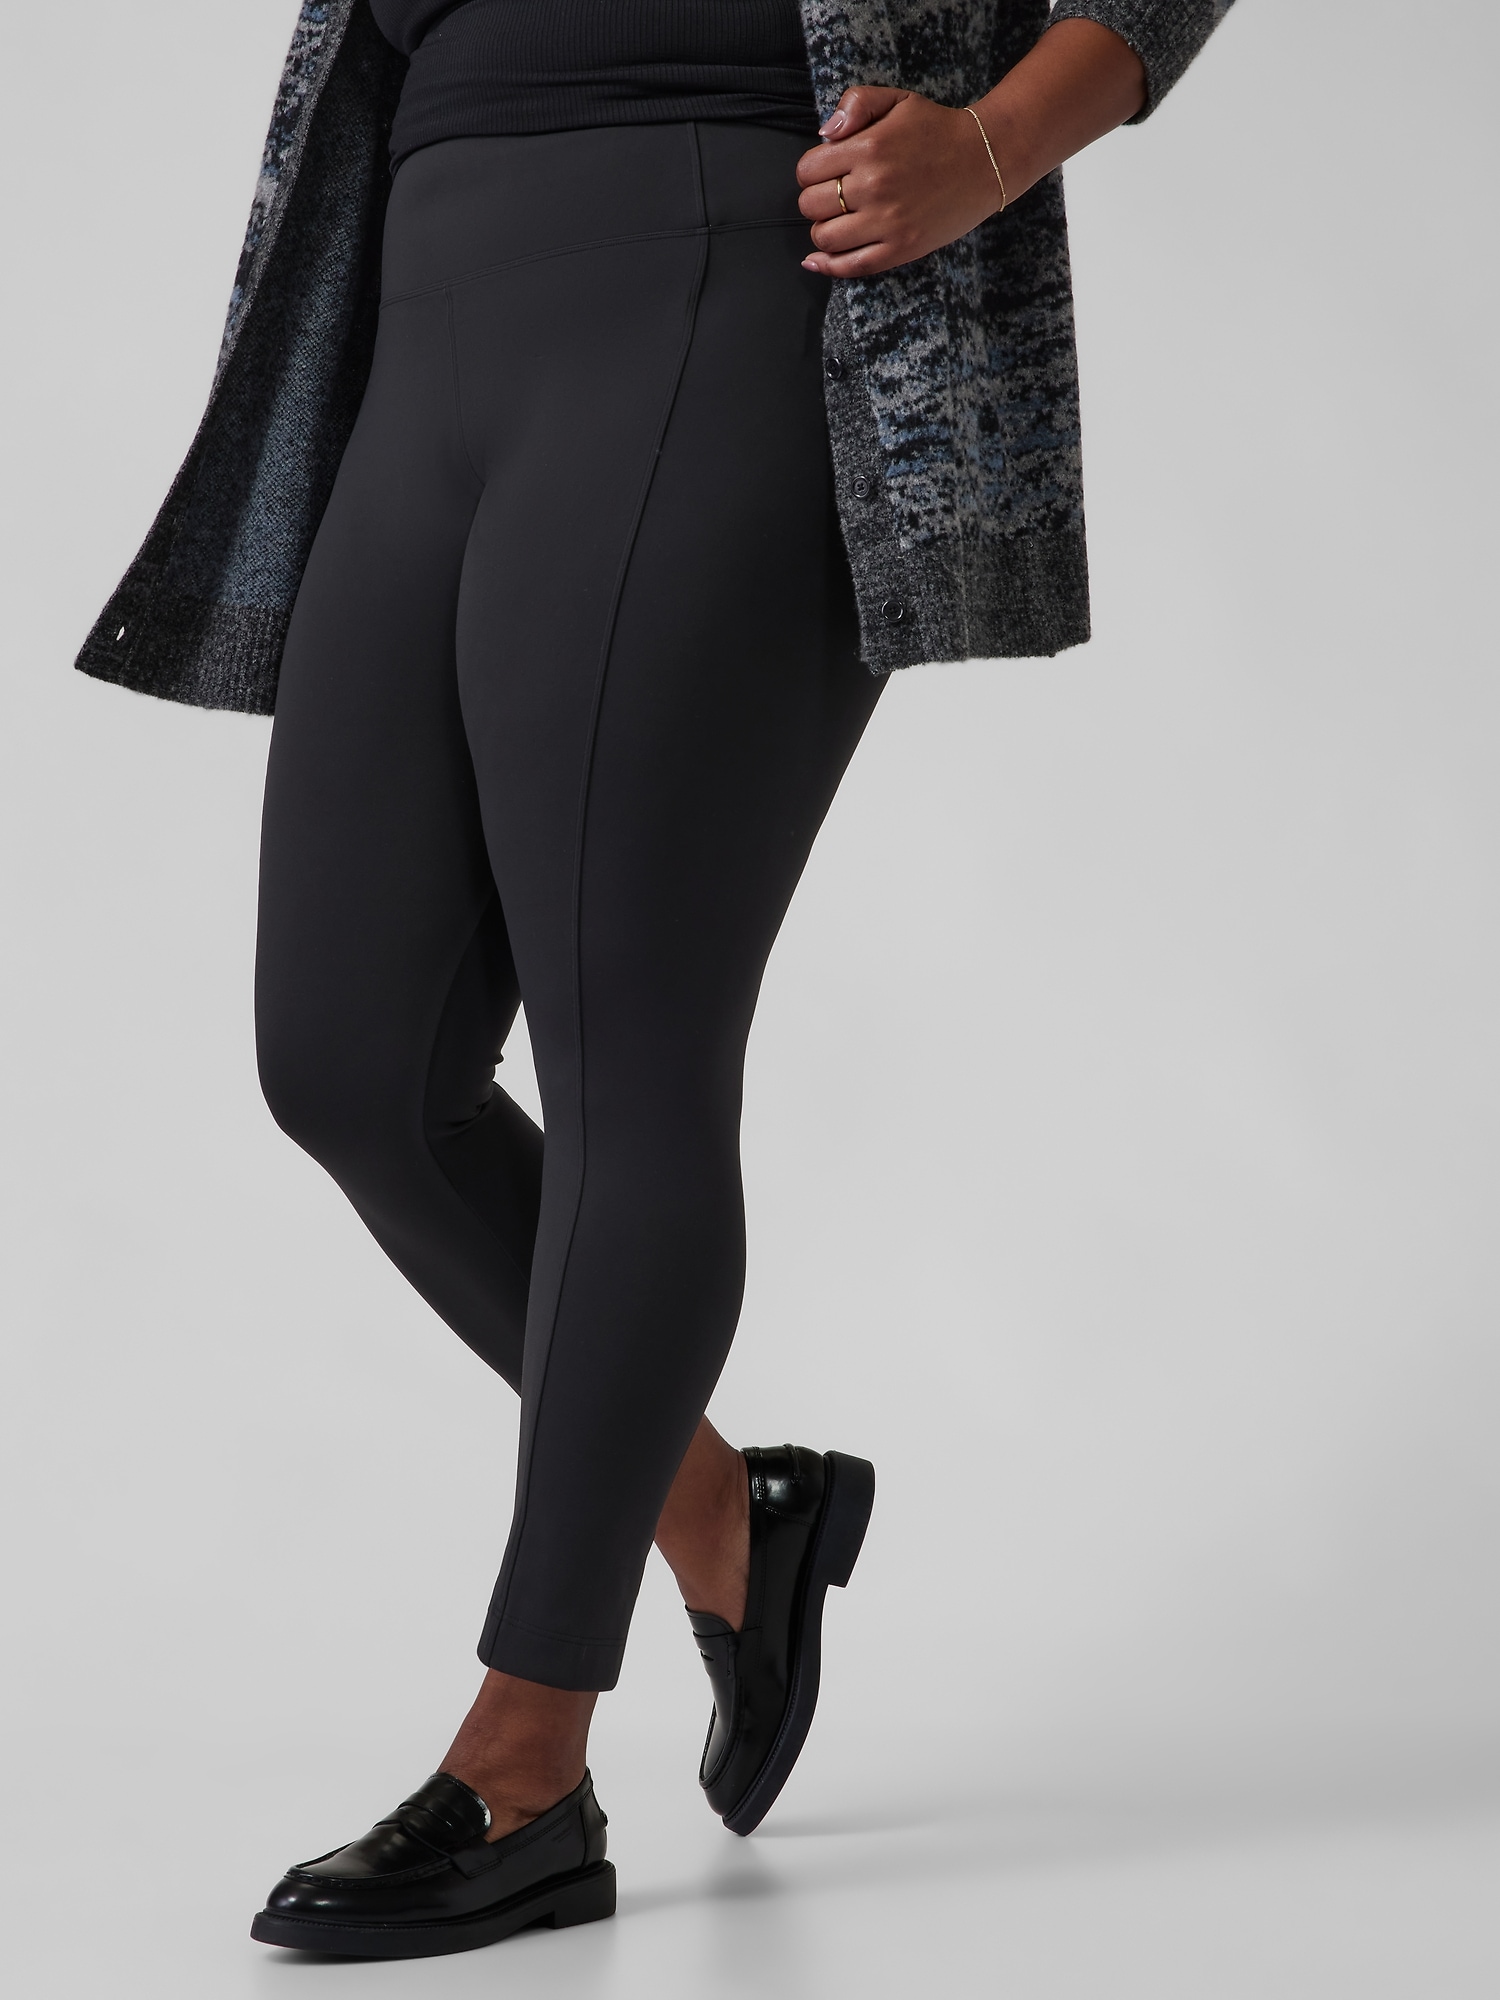 Athleta XS black Delancey Moto Tight legging pant zipper MUA hairdresser  dressy - Athletic apparel